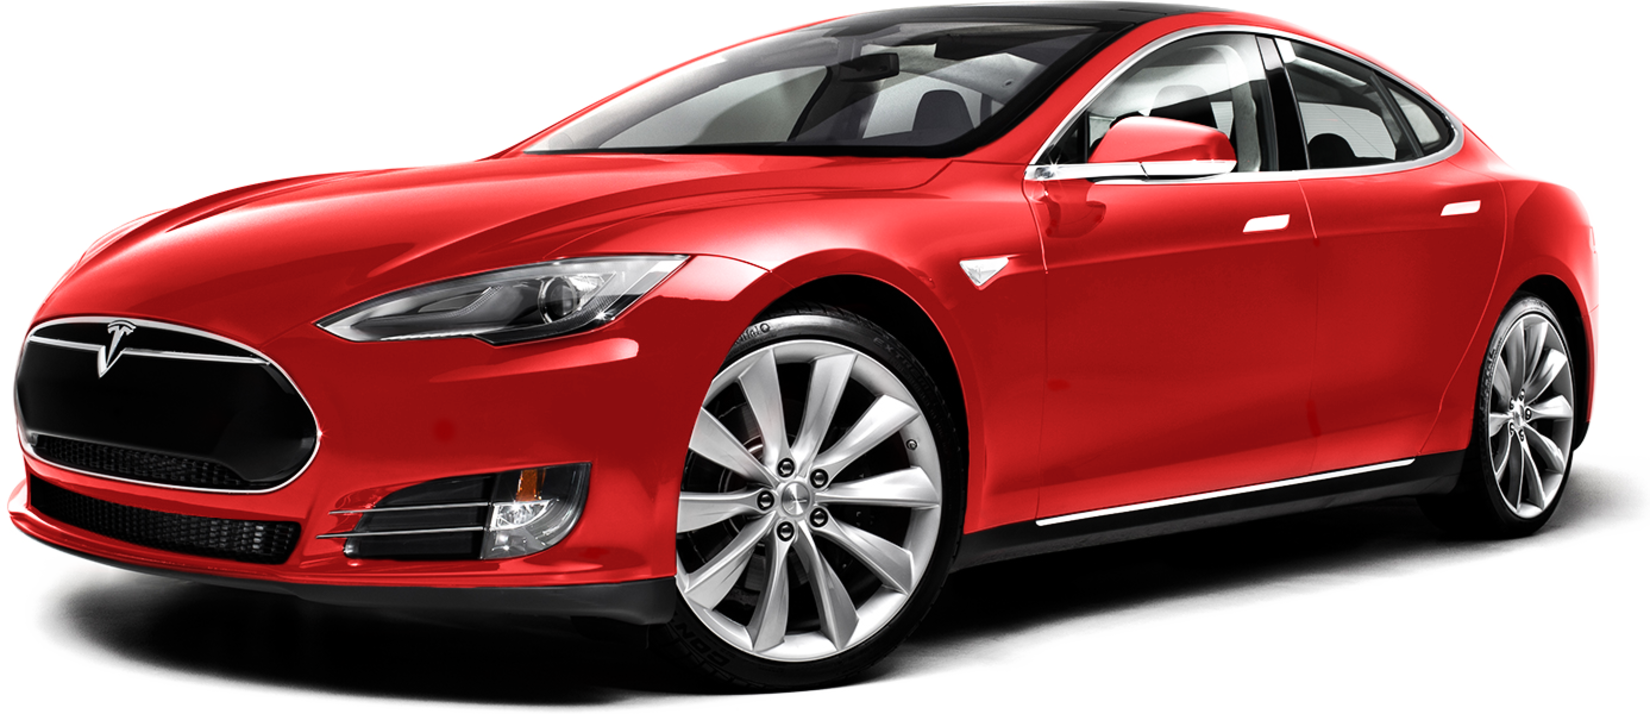 Tesla-model-s-brand-page